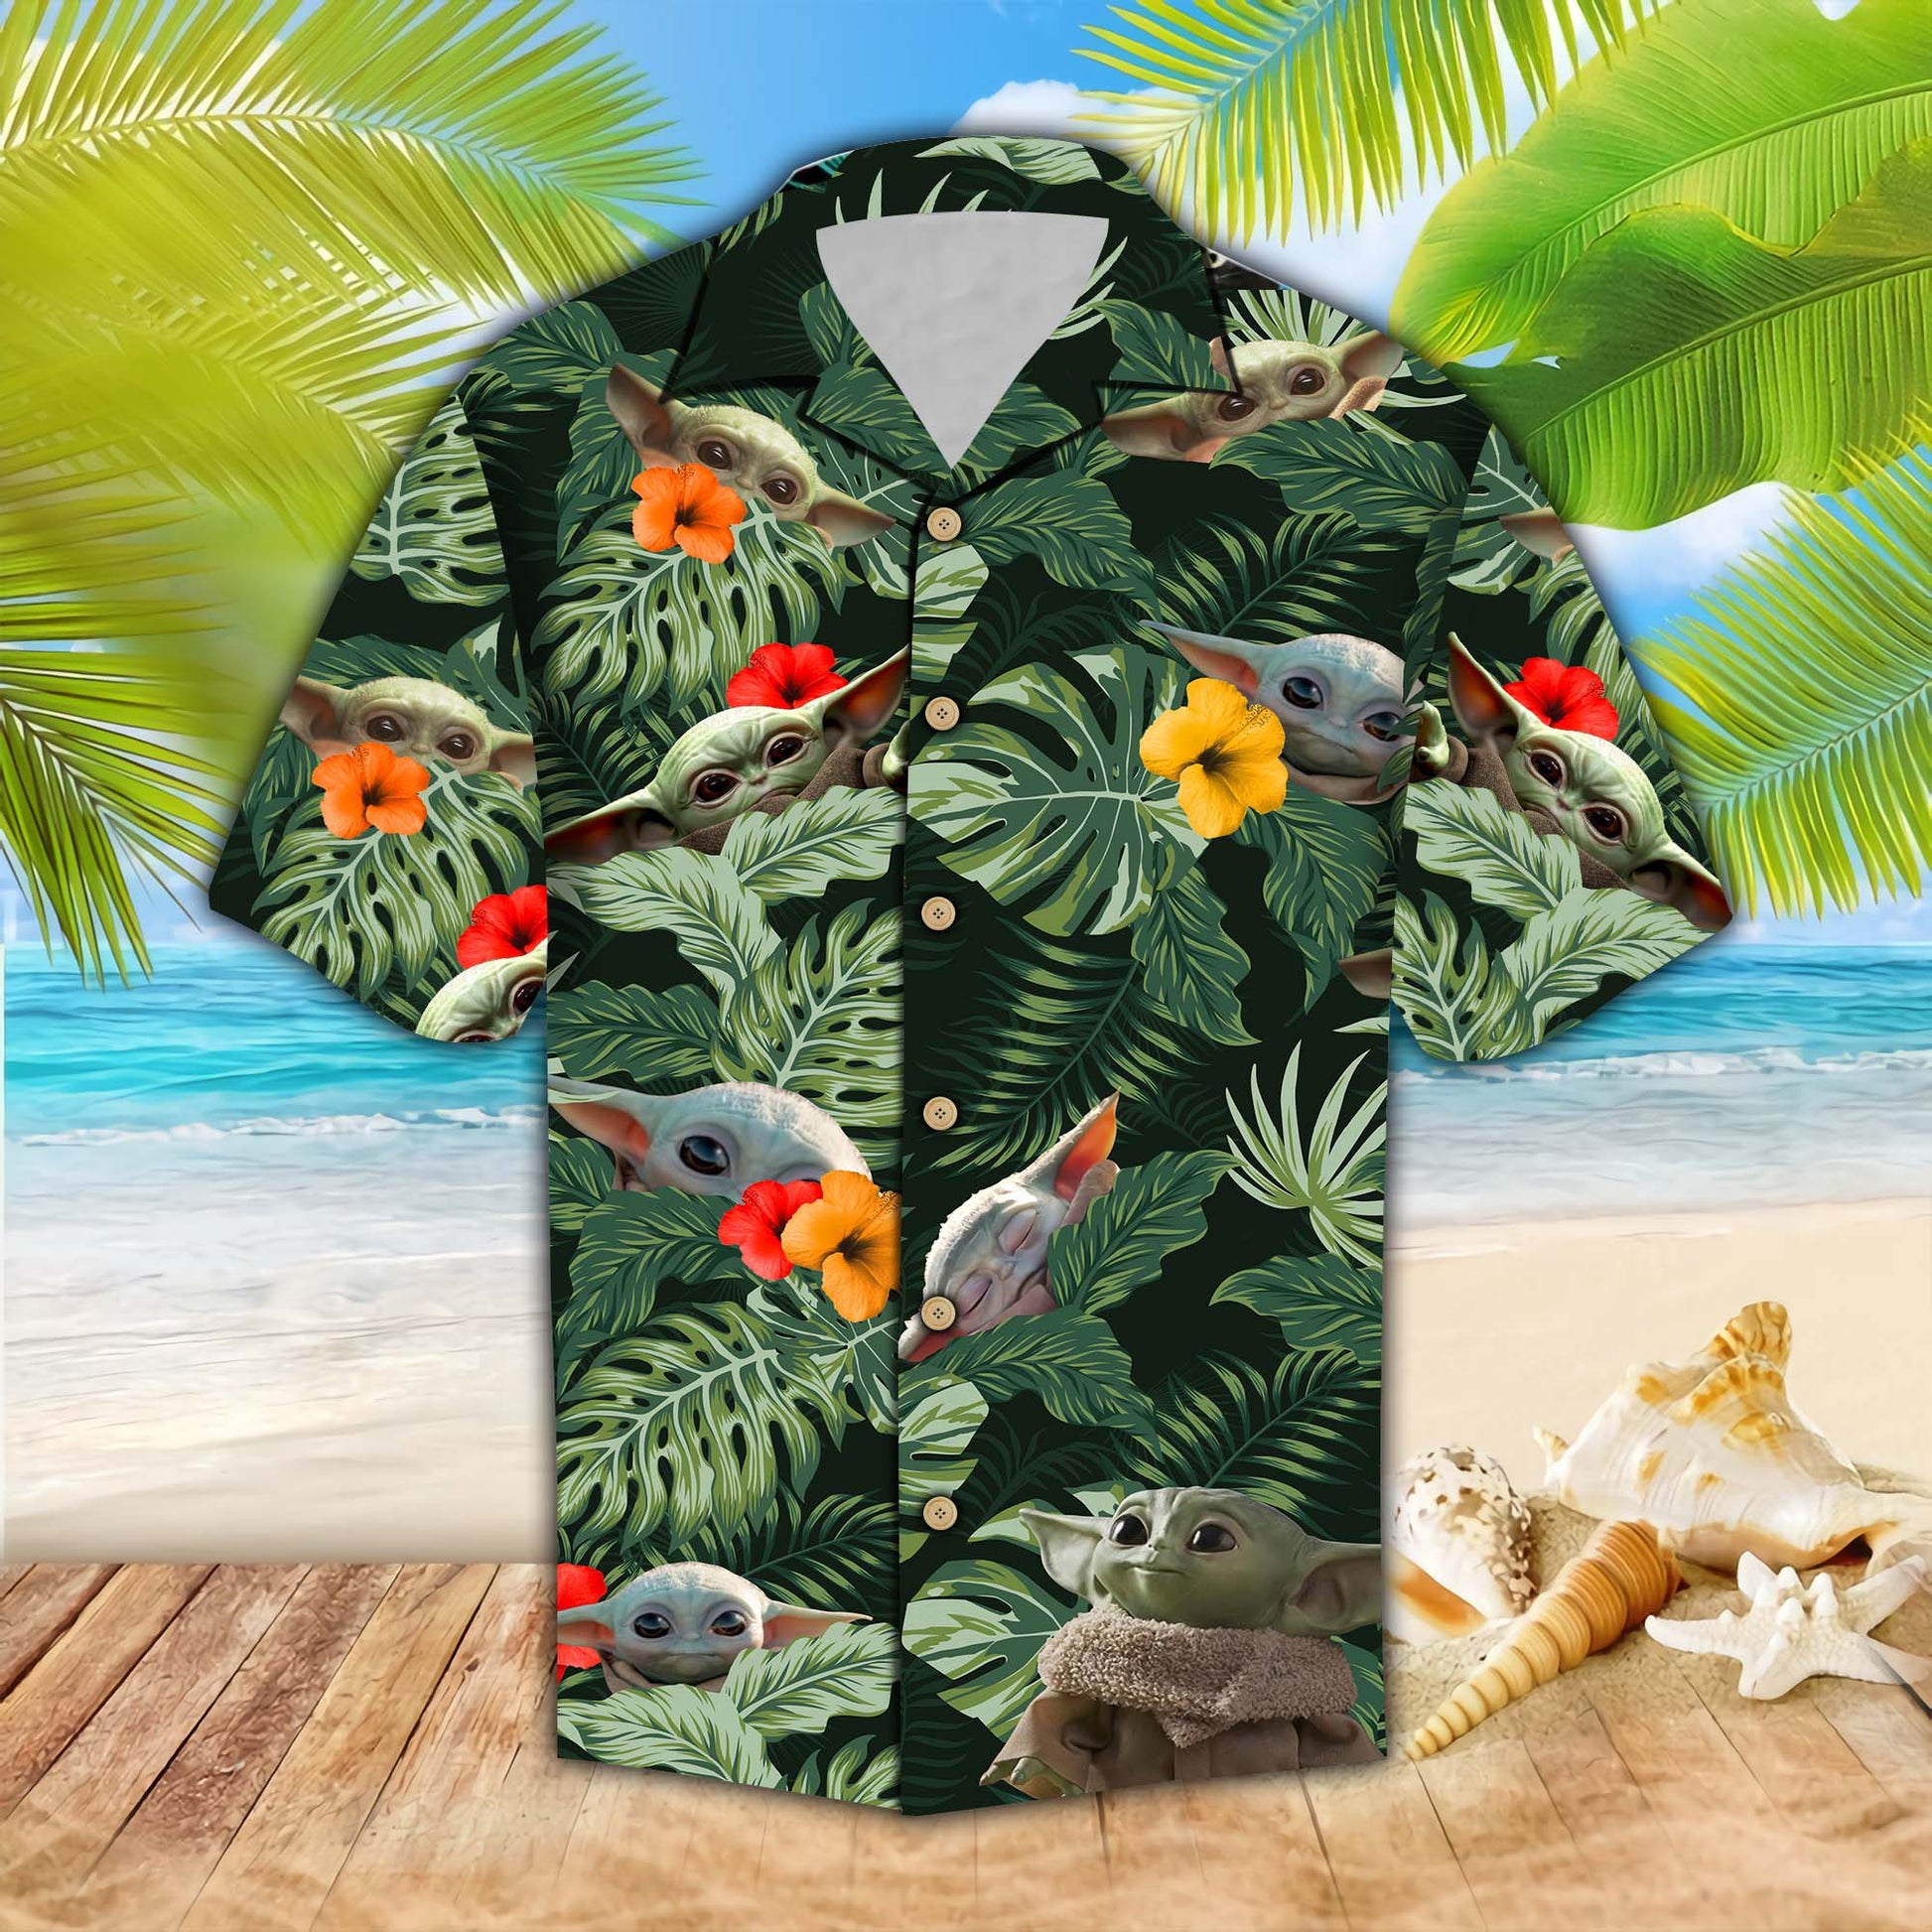  SW Hawaiian Shirt Baby Yoda Grogu Hibiscus Flower Tropical 3d Green Hawaii Aloha Shirt